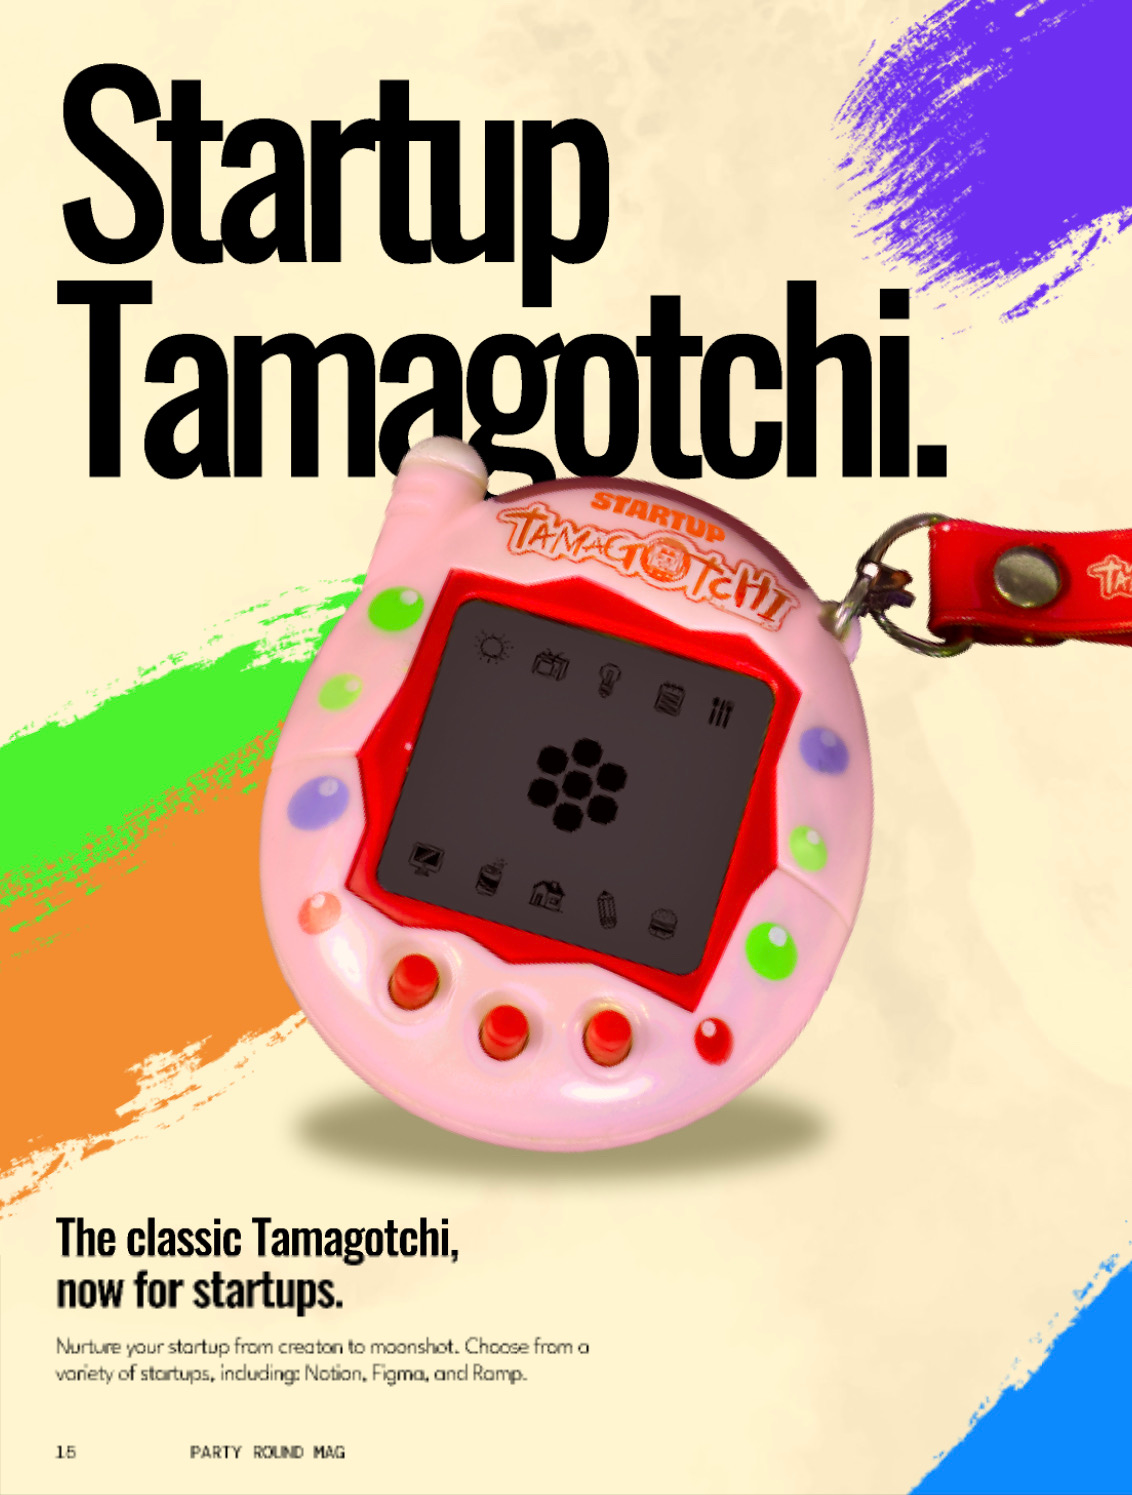 Startup Tamagotchi